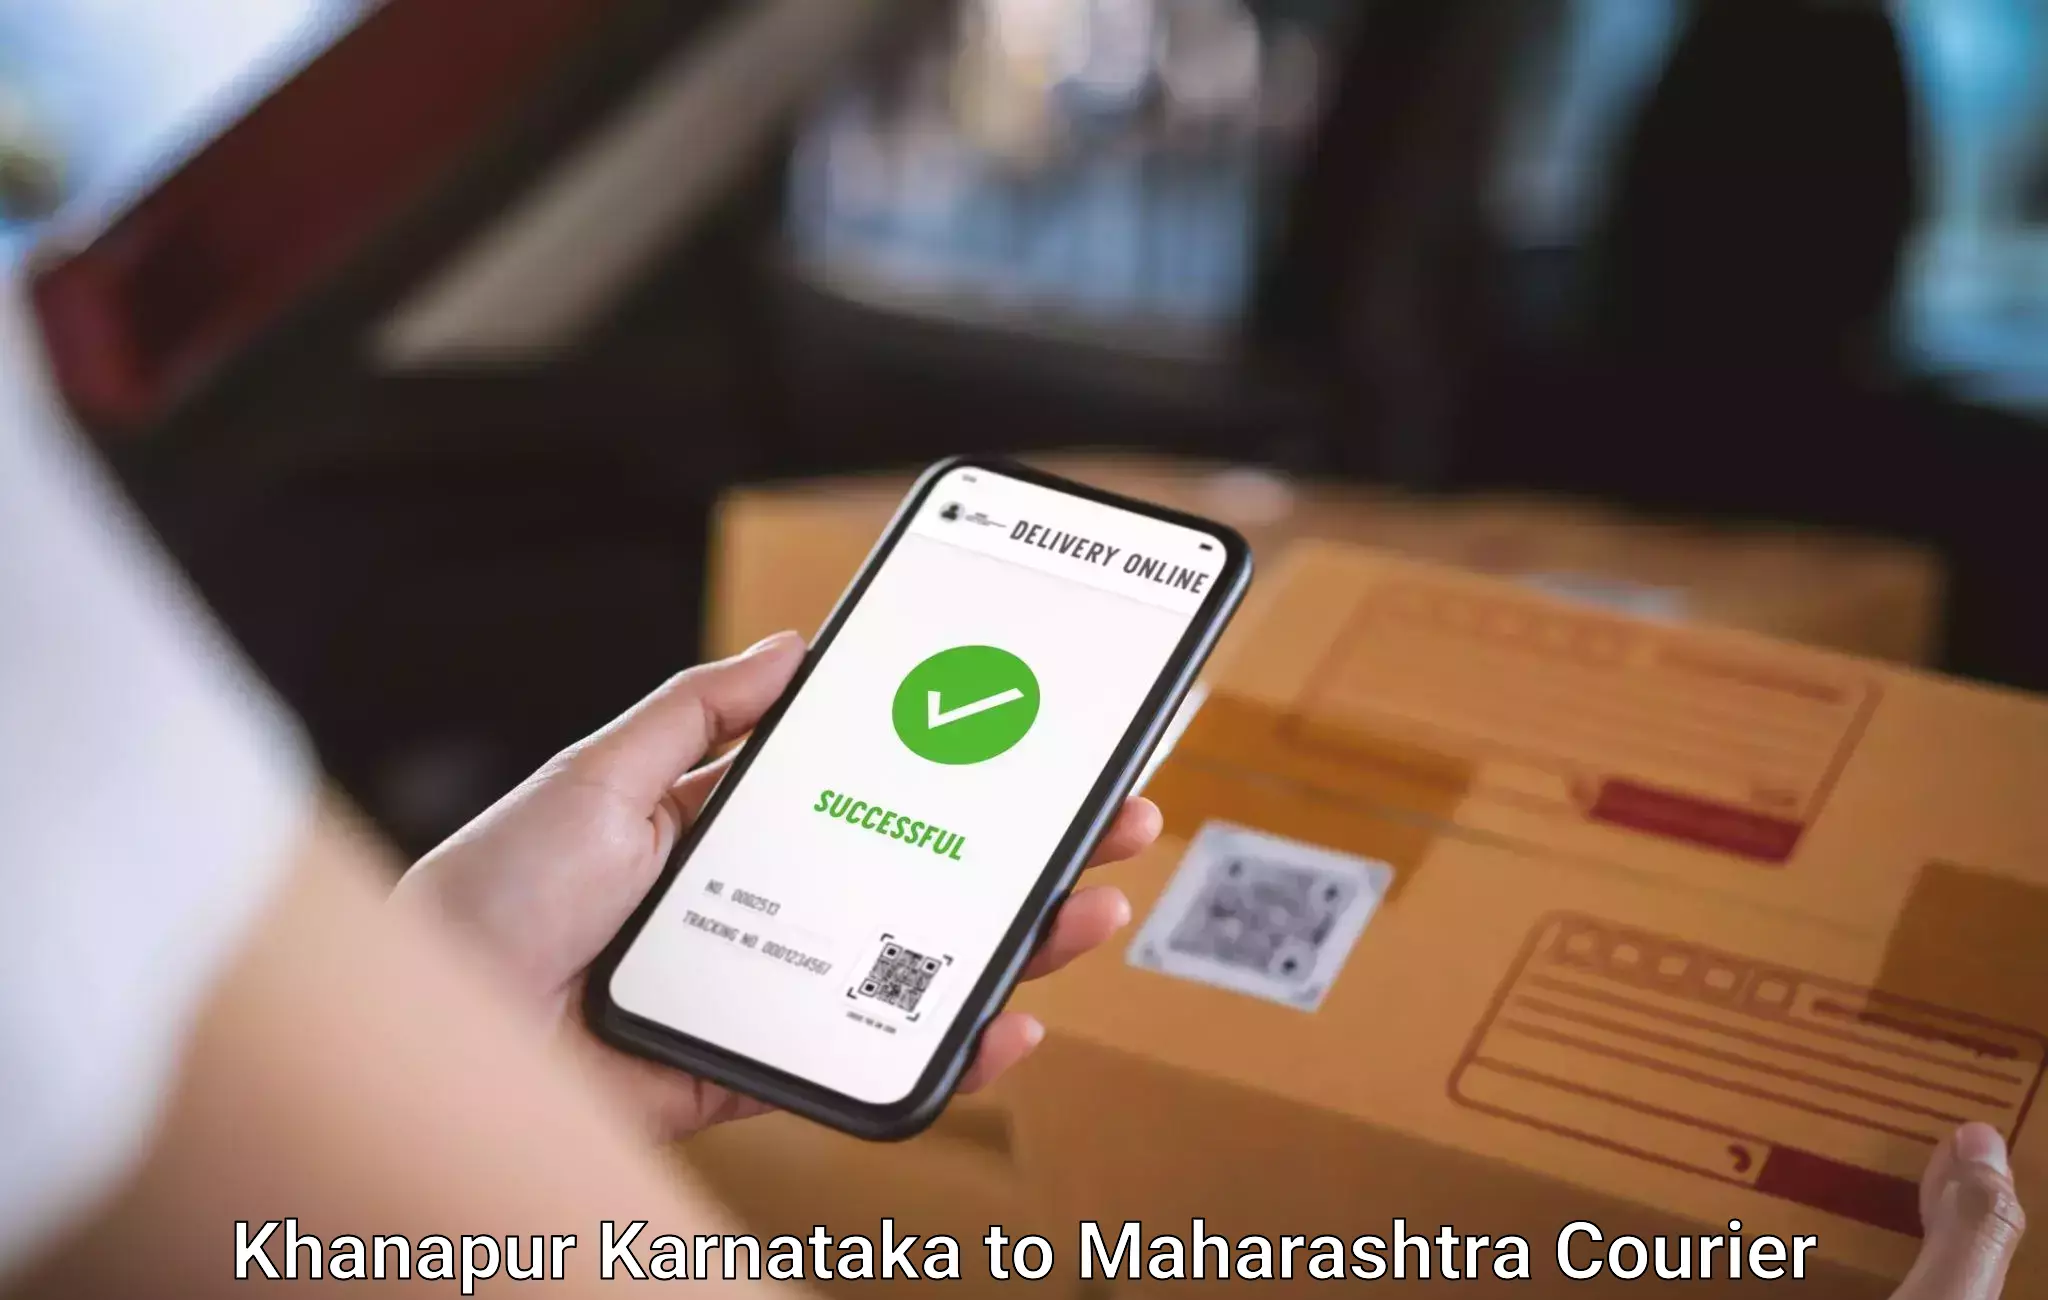 Baggage transport innovation Khanapur Karnataka to Dhamangaon